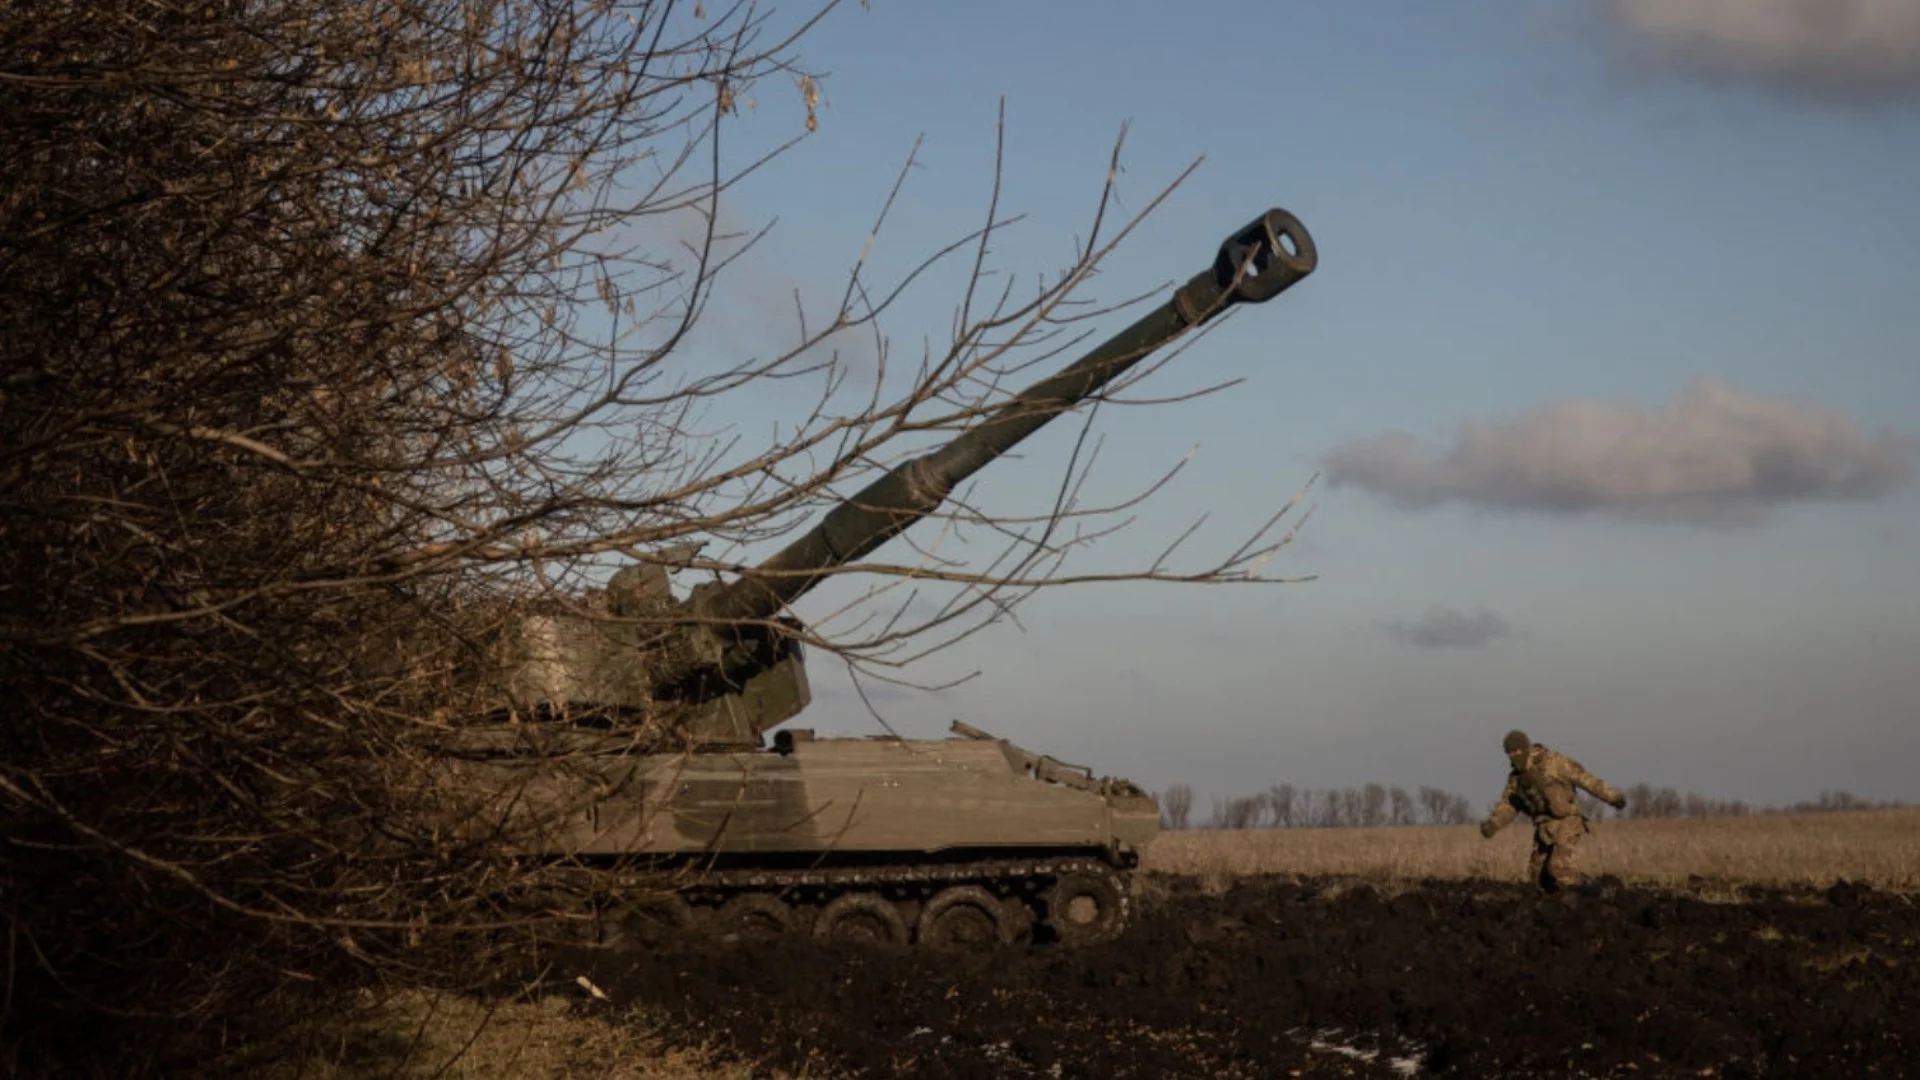 Огън до дупка - снаряди, дронове, снаряди: Но британска гаубица оцеля в Украйна (ВИДЕО)